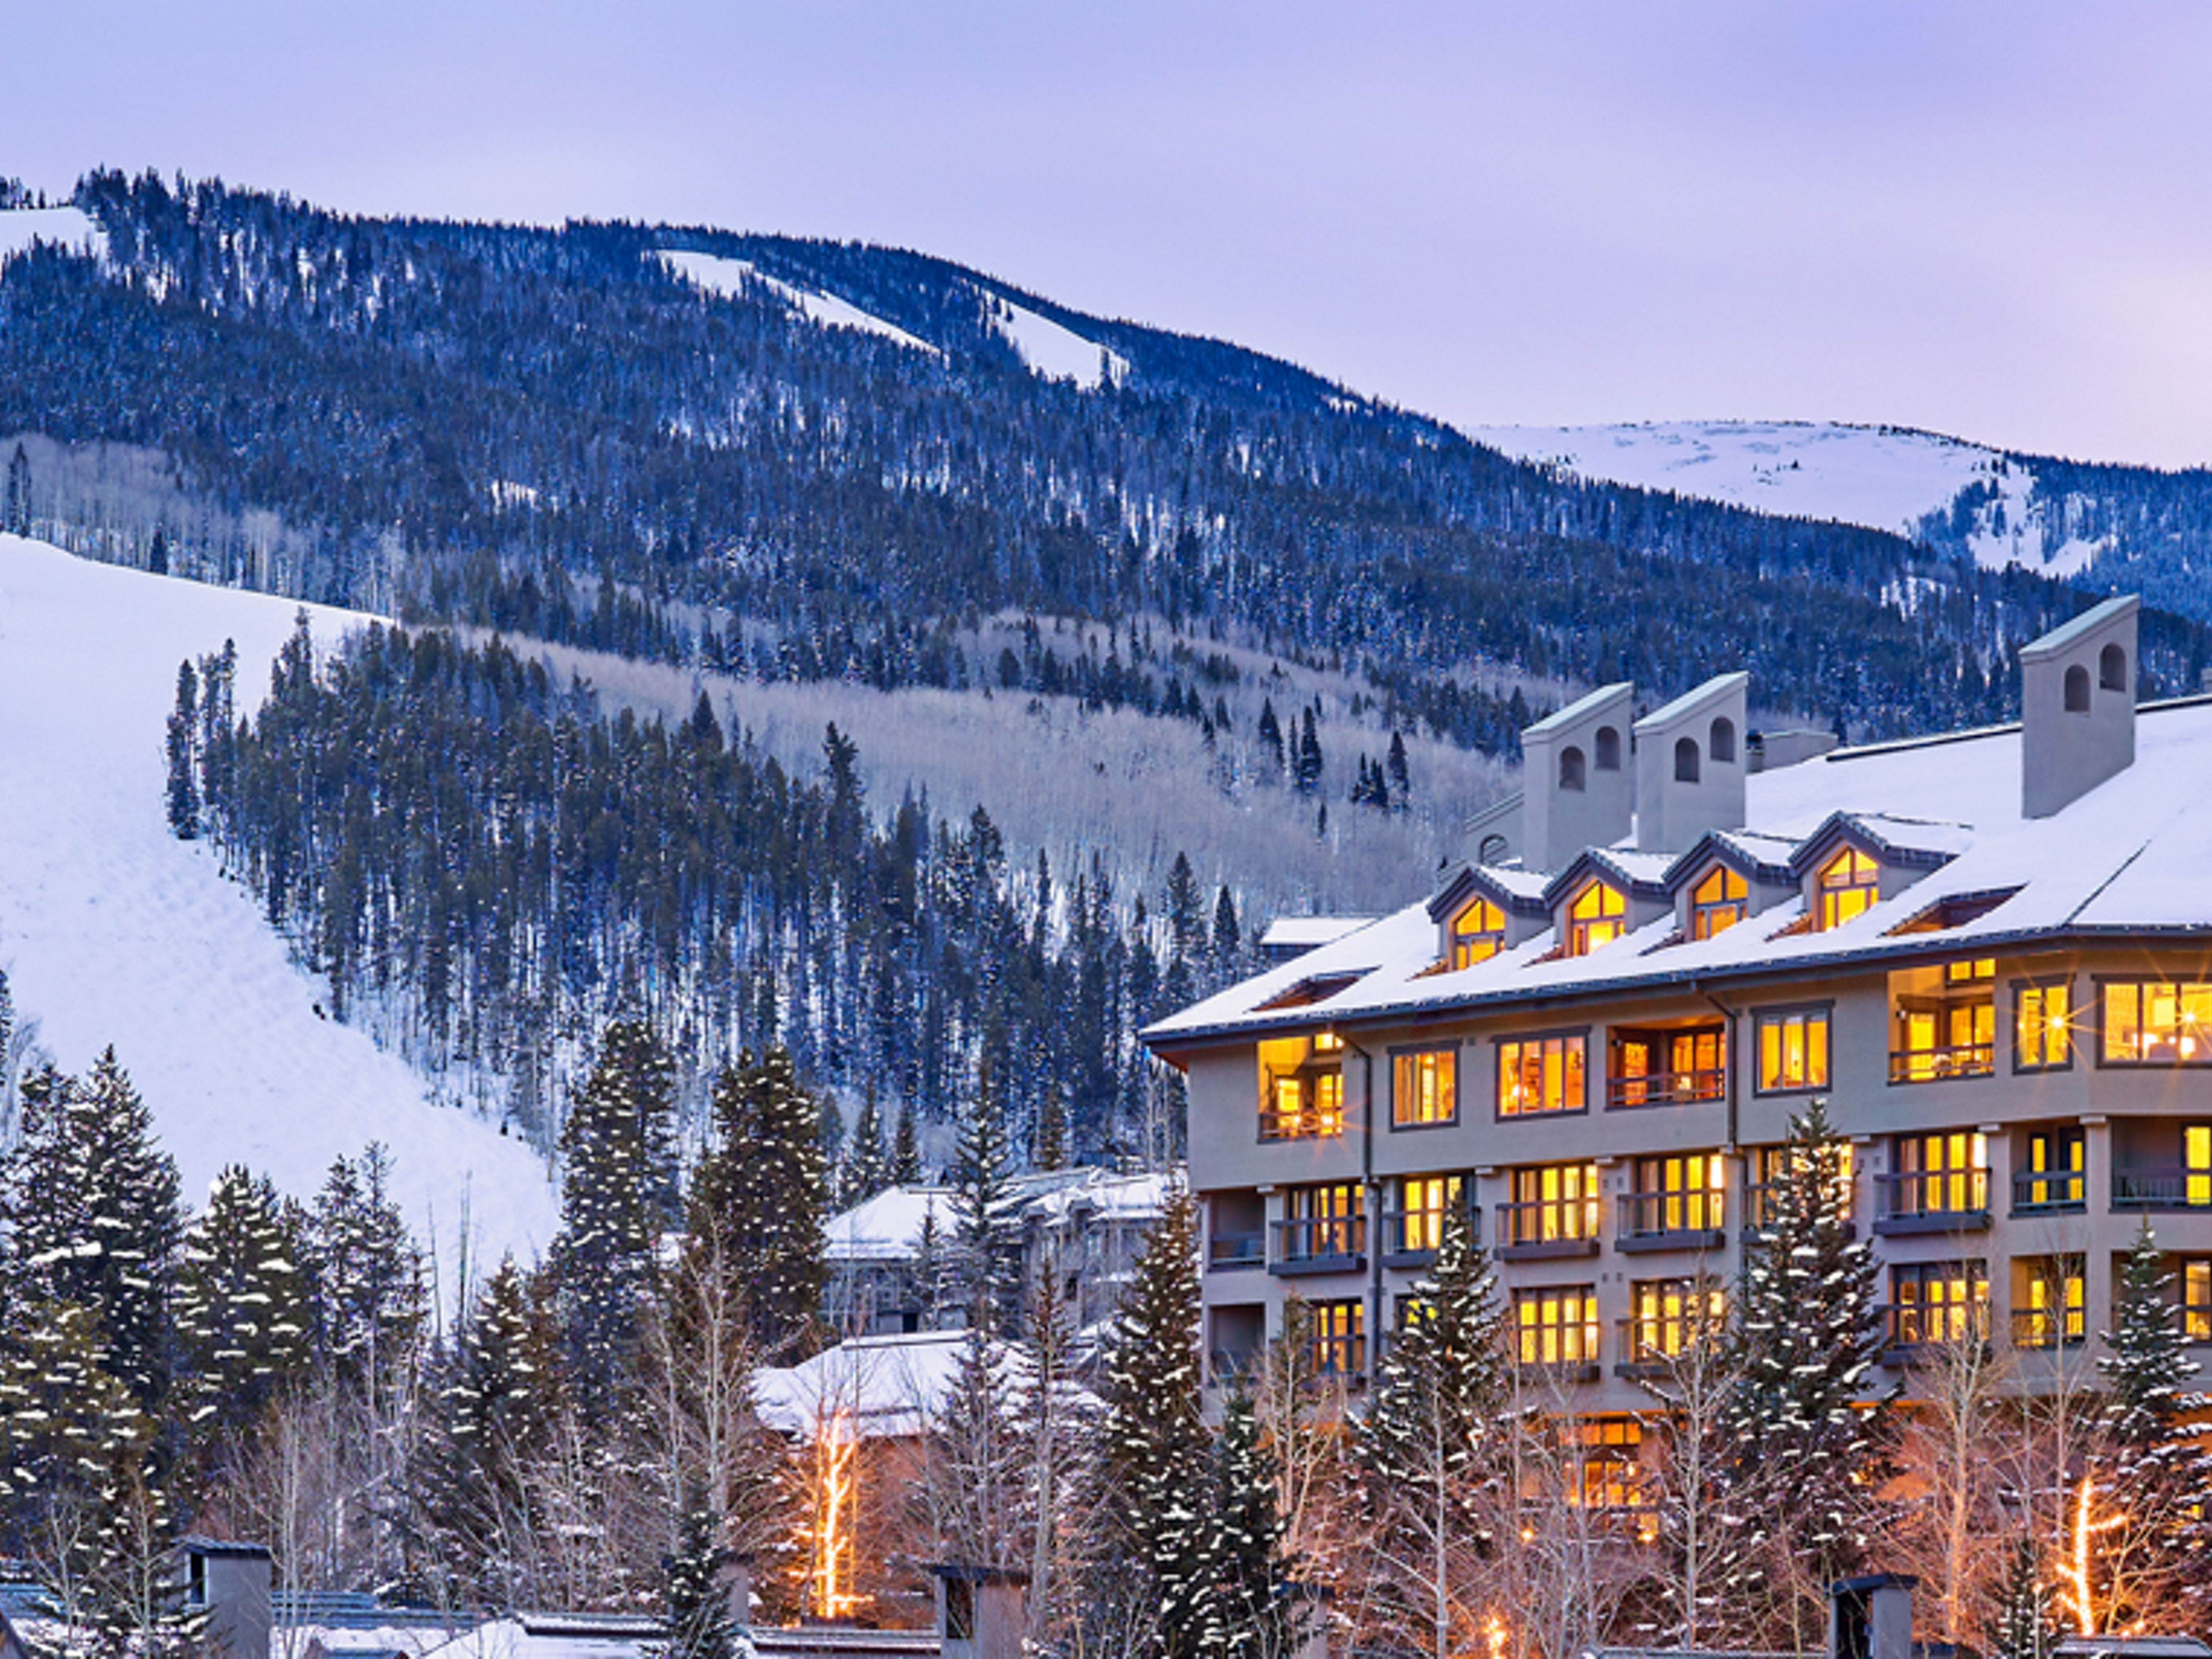 Planning your Colorado Ski Trip